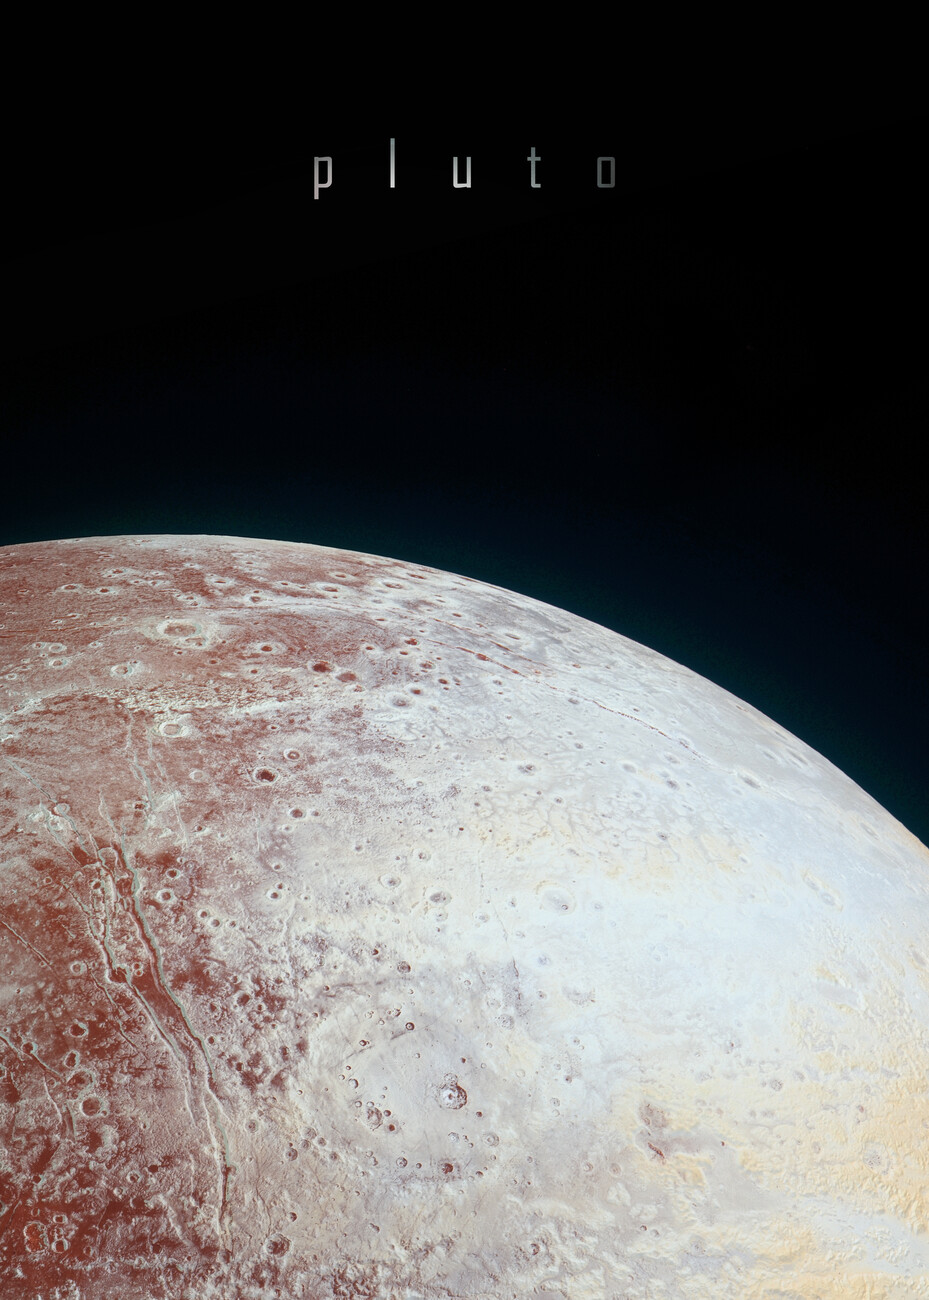 122496 8K, NASA, Pluto, 4K - Rare Gallery HD Wallpapers